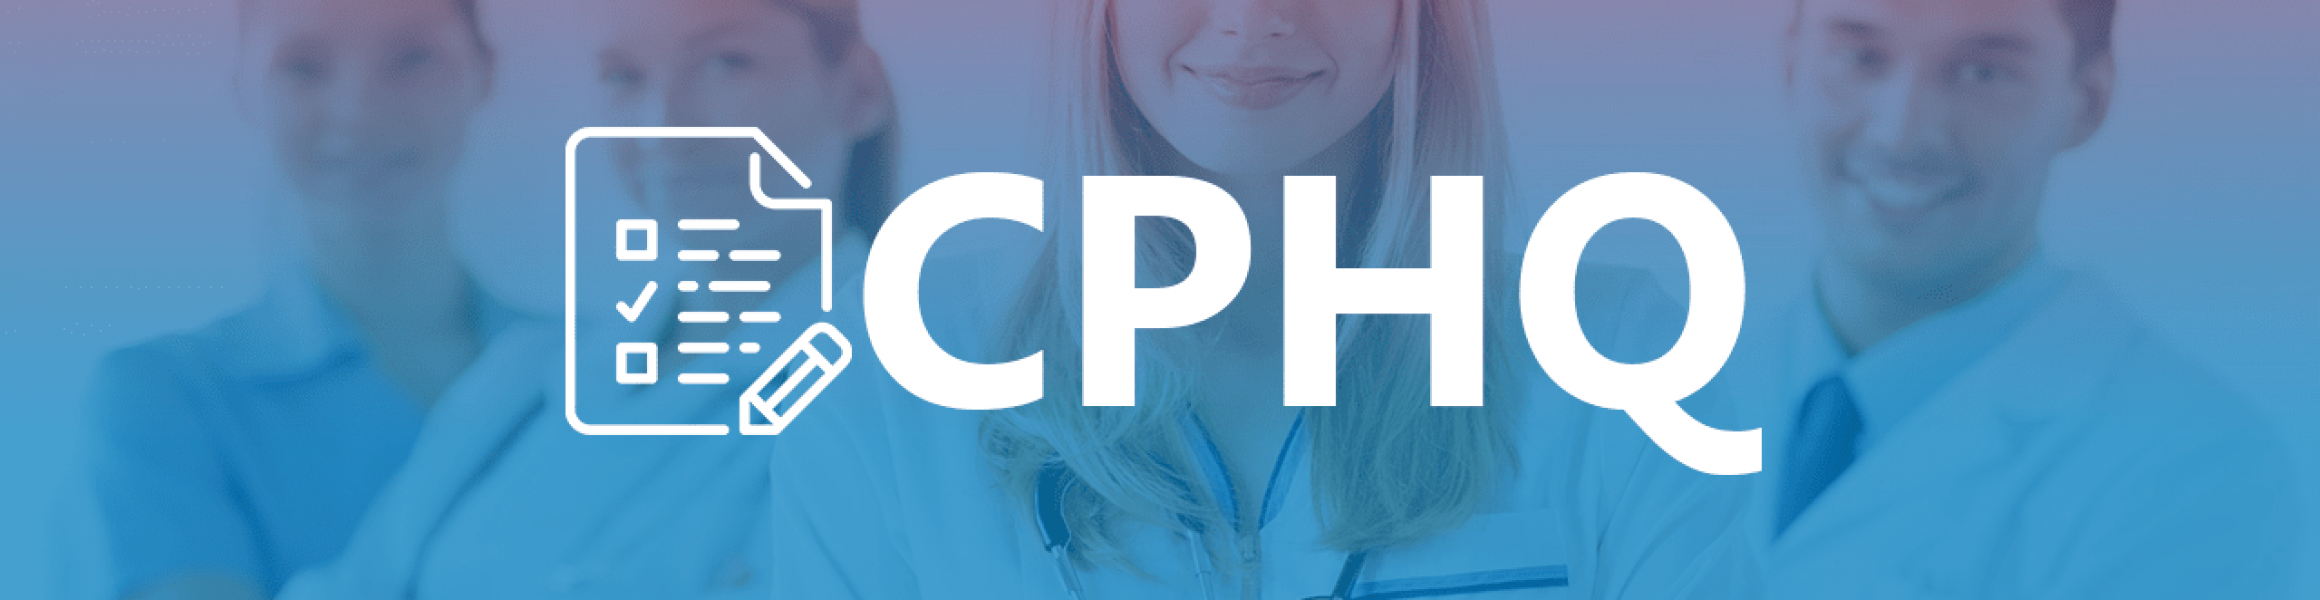 CPHQ인증시험대비 공부자료 | Sns-Brigh10